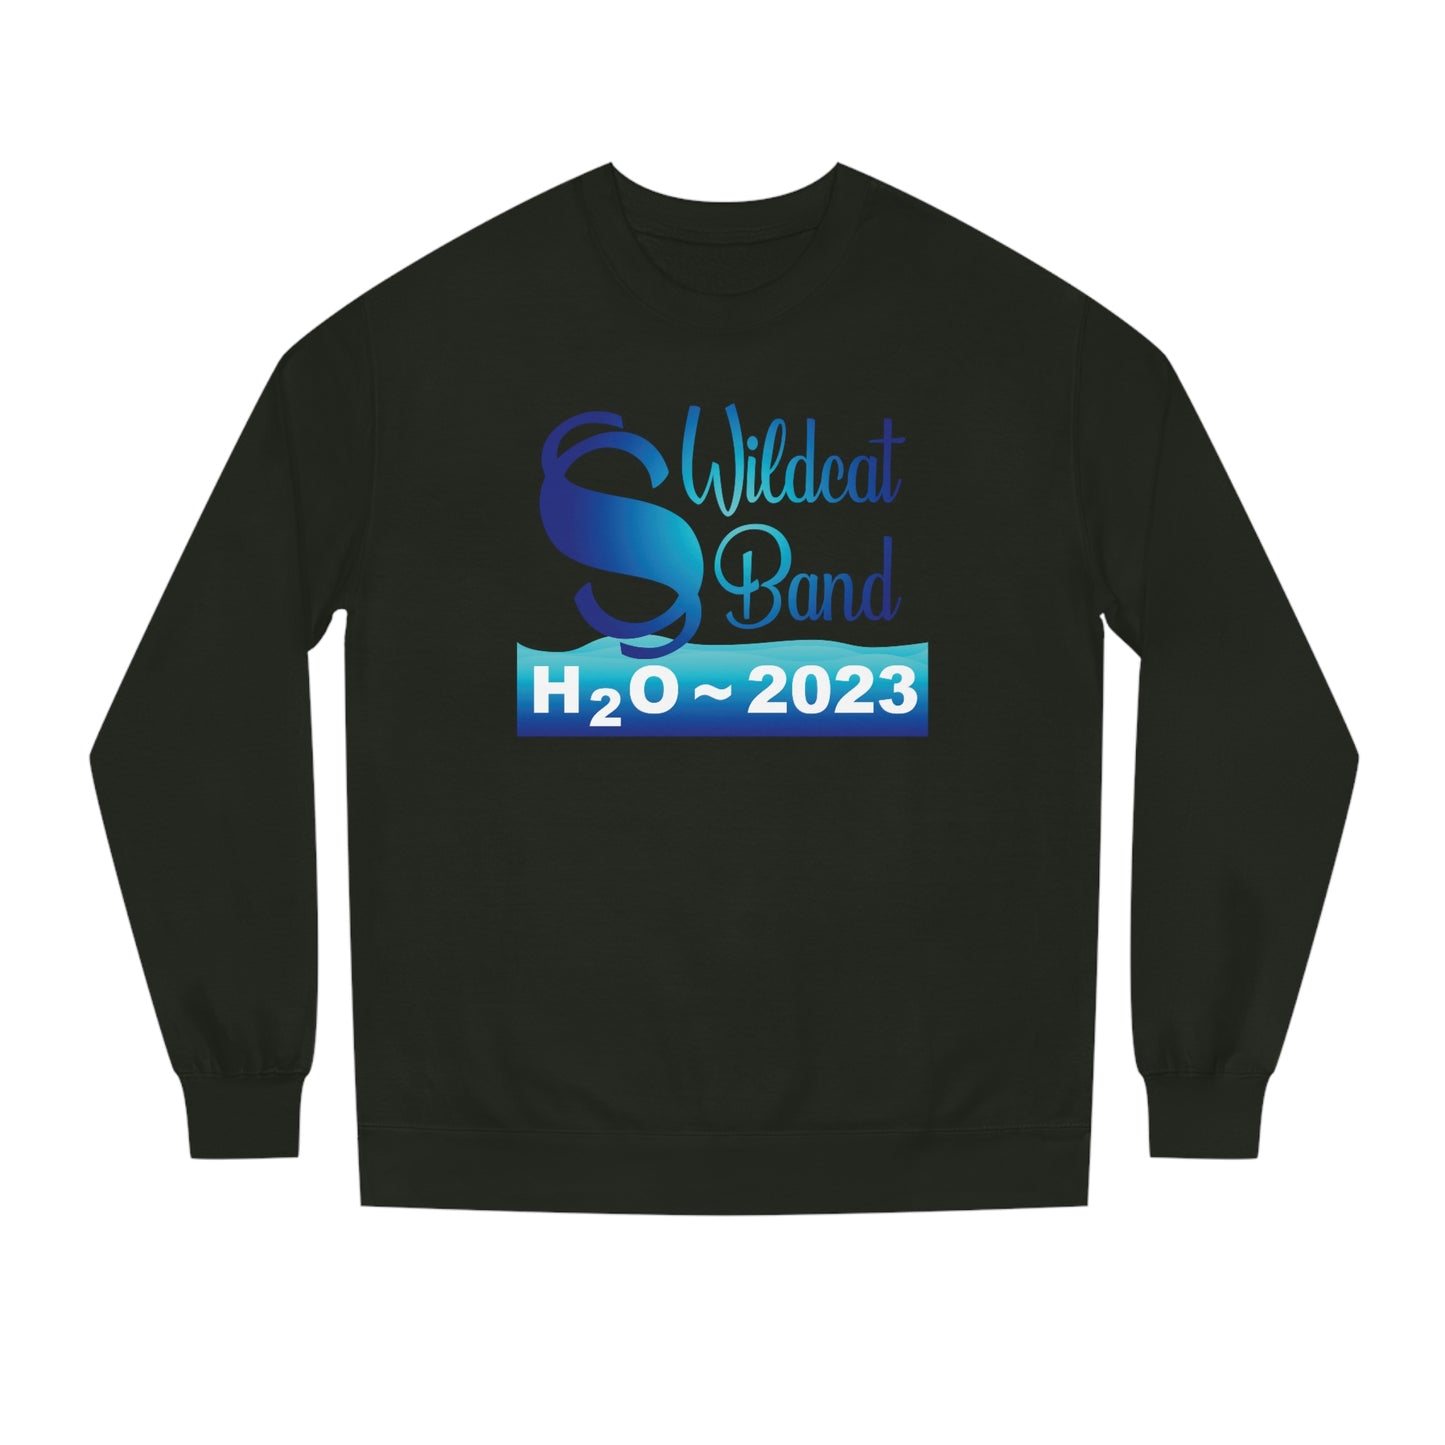 SS Band 2023 Sweatshirt